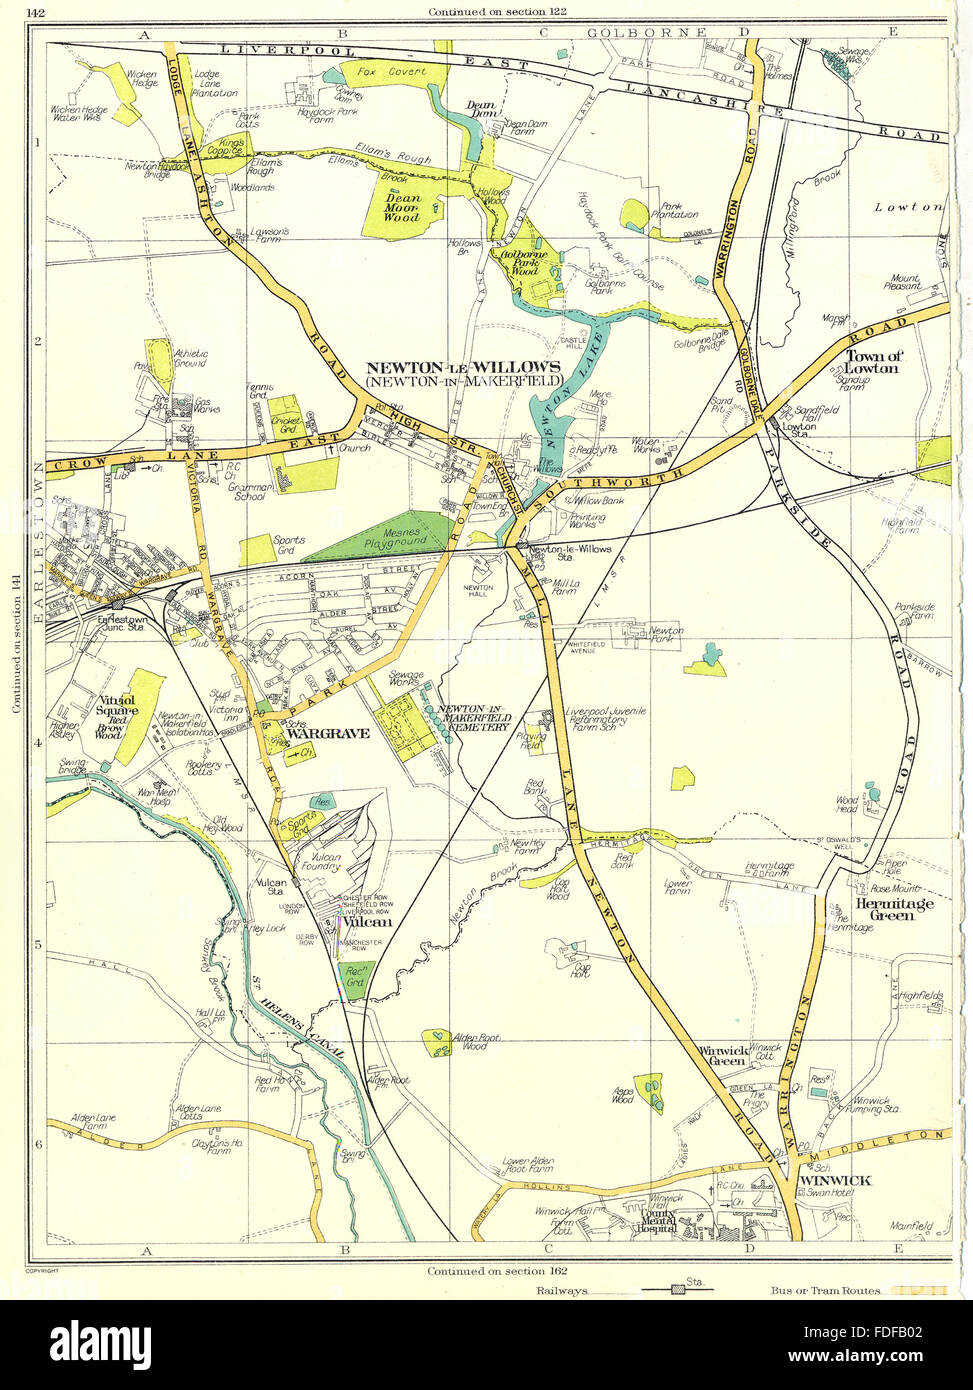 LANCS Newton-le-Willows Wargrave Vulcan Winwick Hermitage Green Lowton 1935 map Stock Photo